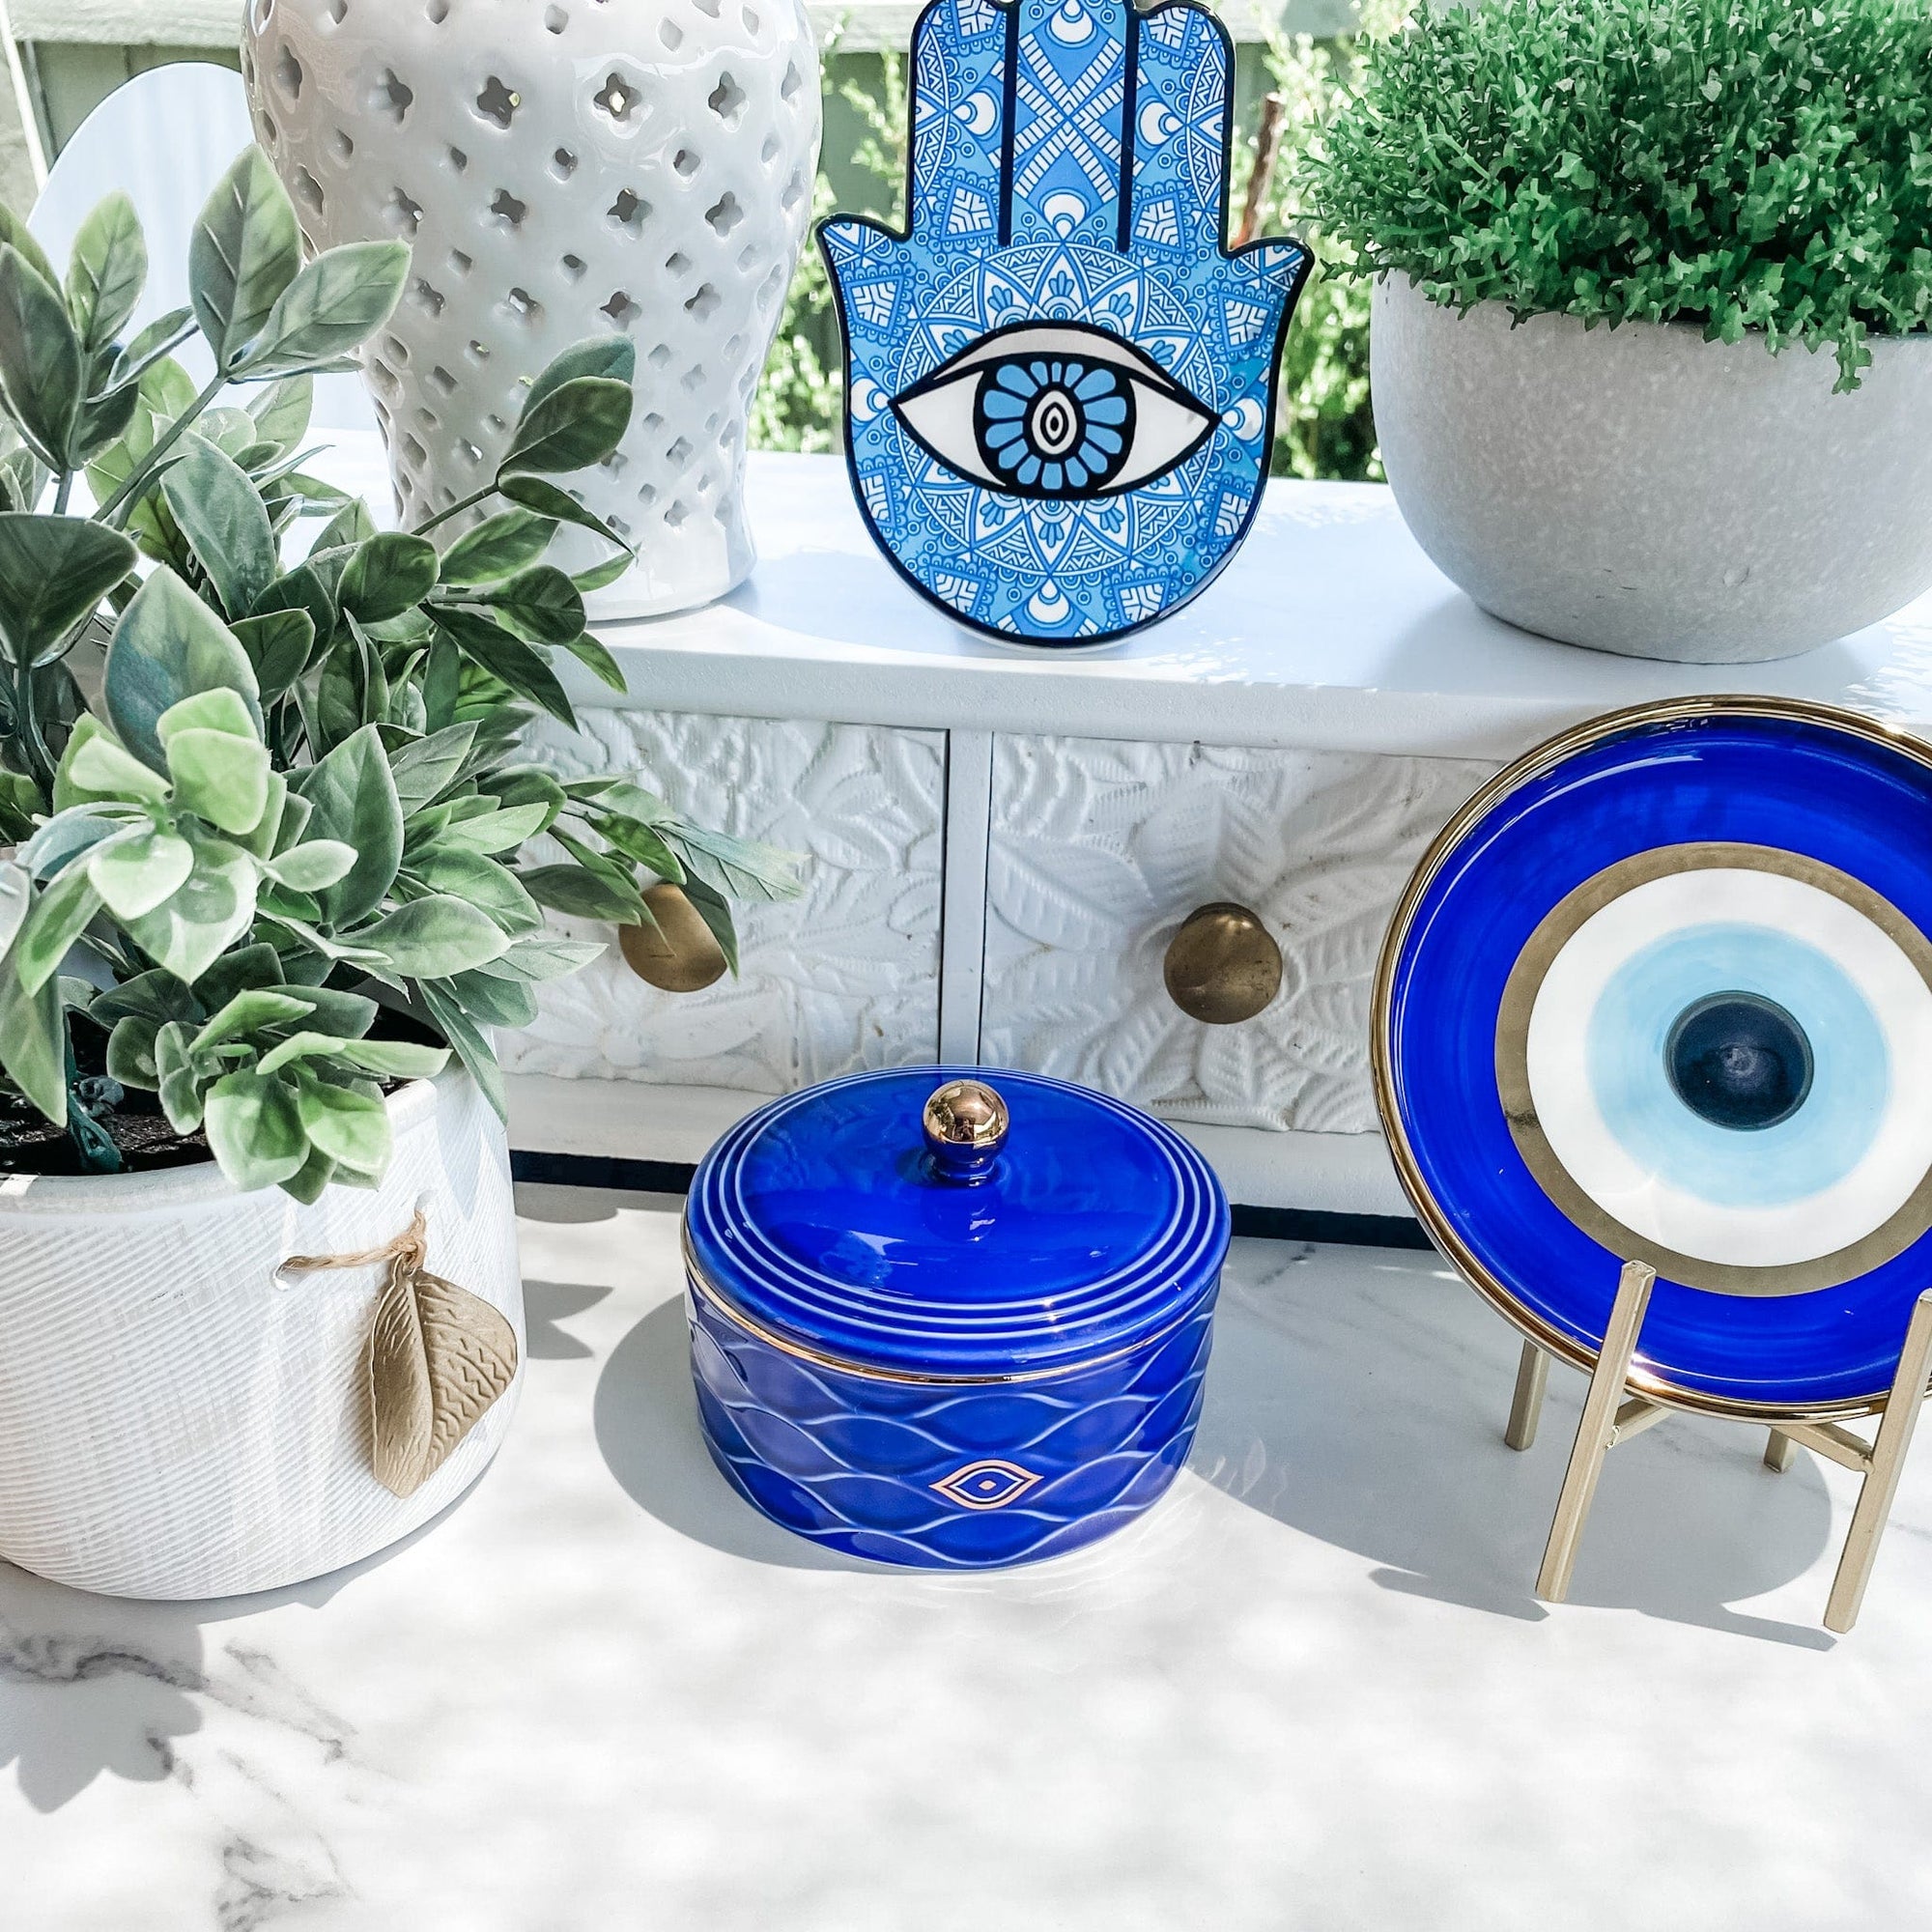 S1455 turkish evil eye ceramic trinkett bowl with lid home decor australia gemrox sydney 1